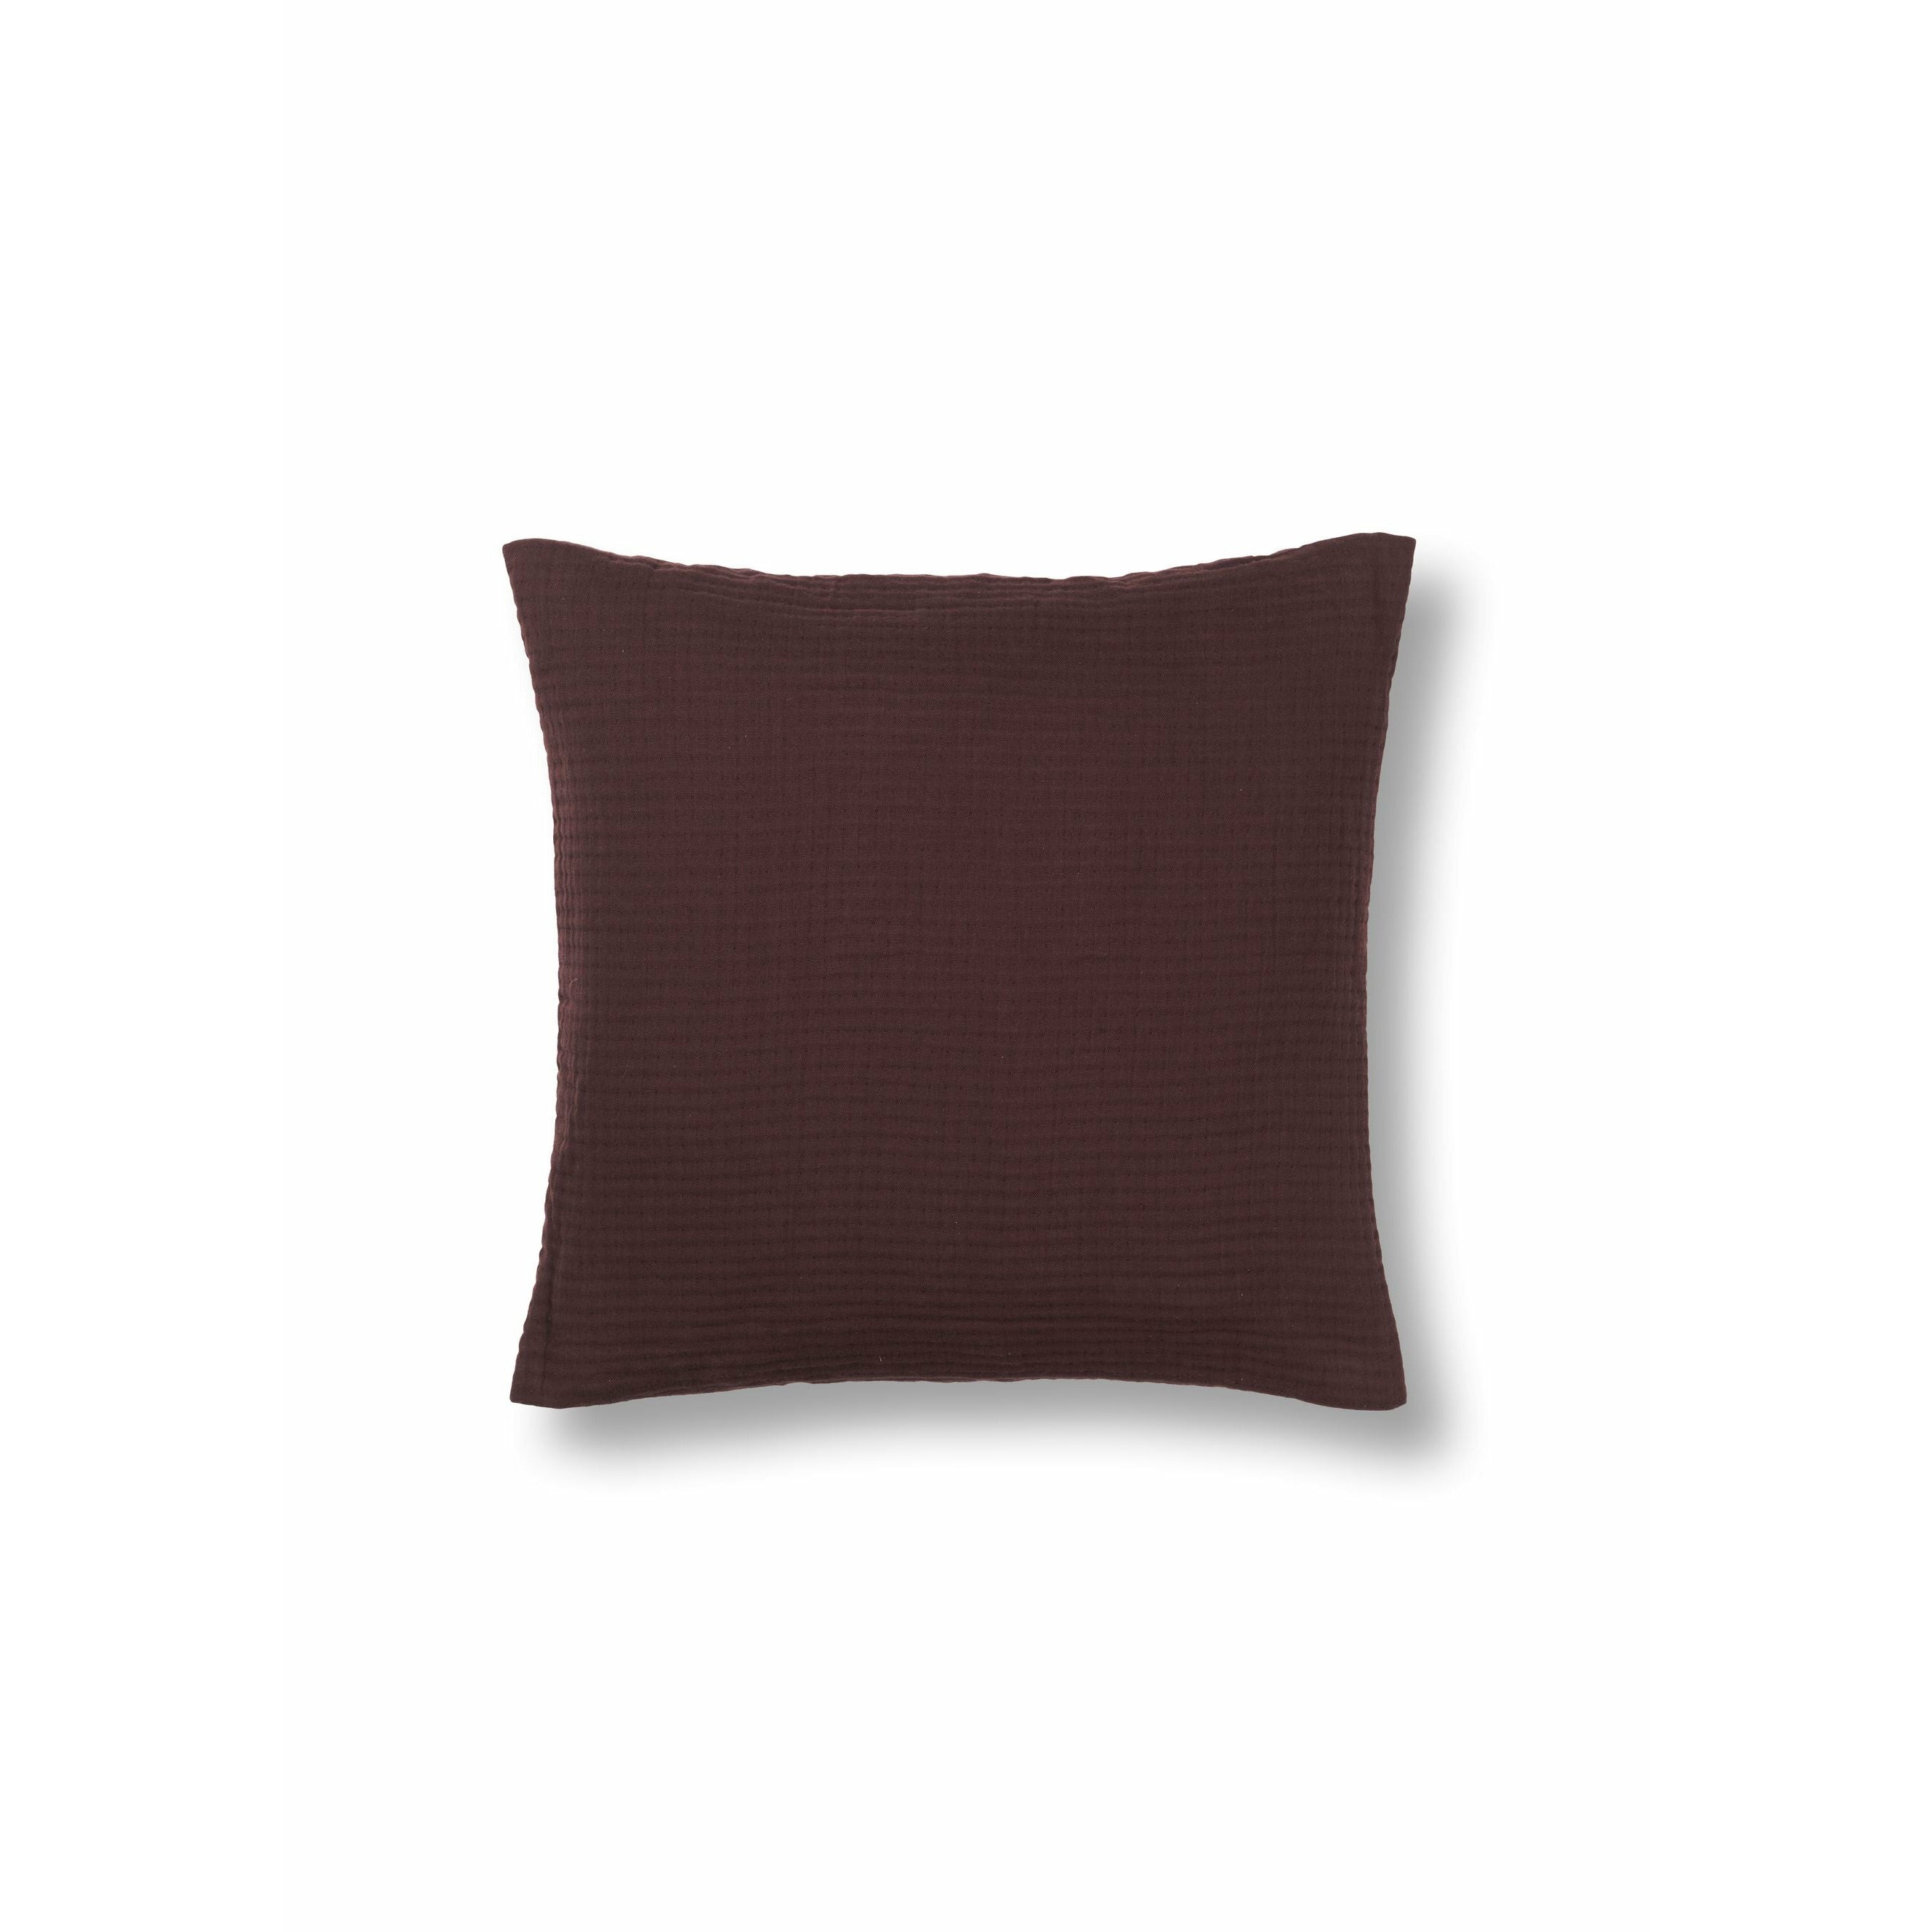 Juna View Cushion 45x45 Cm, Chocolate